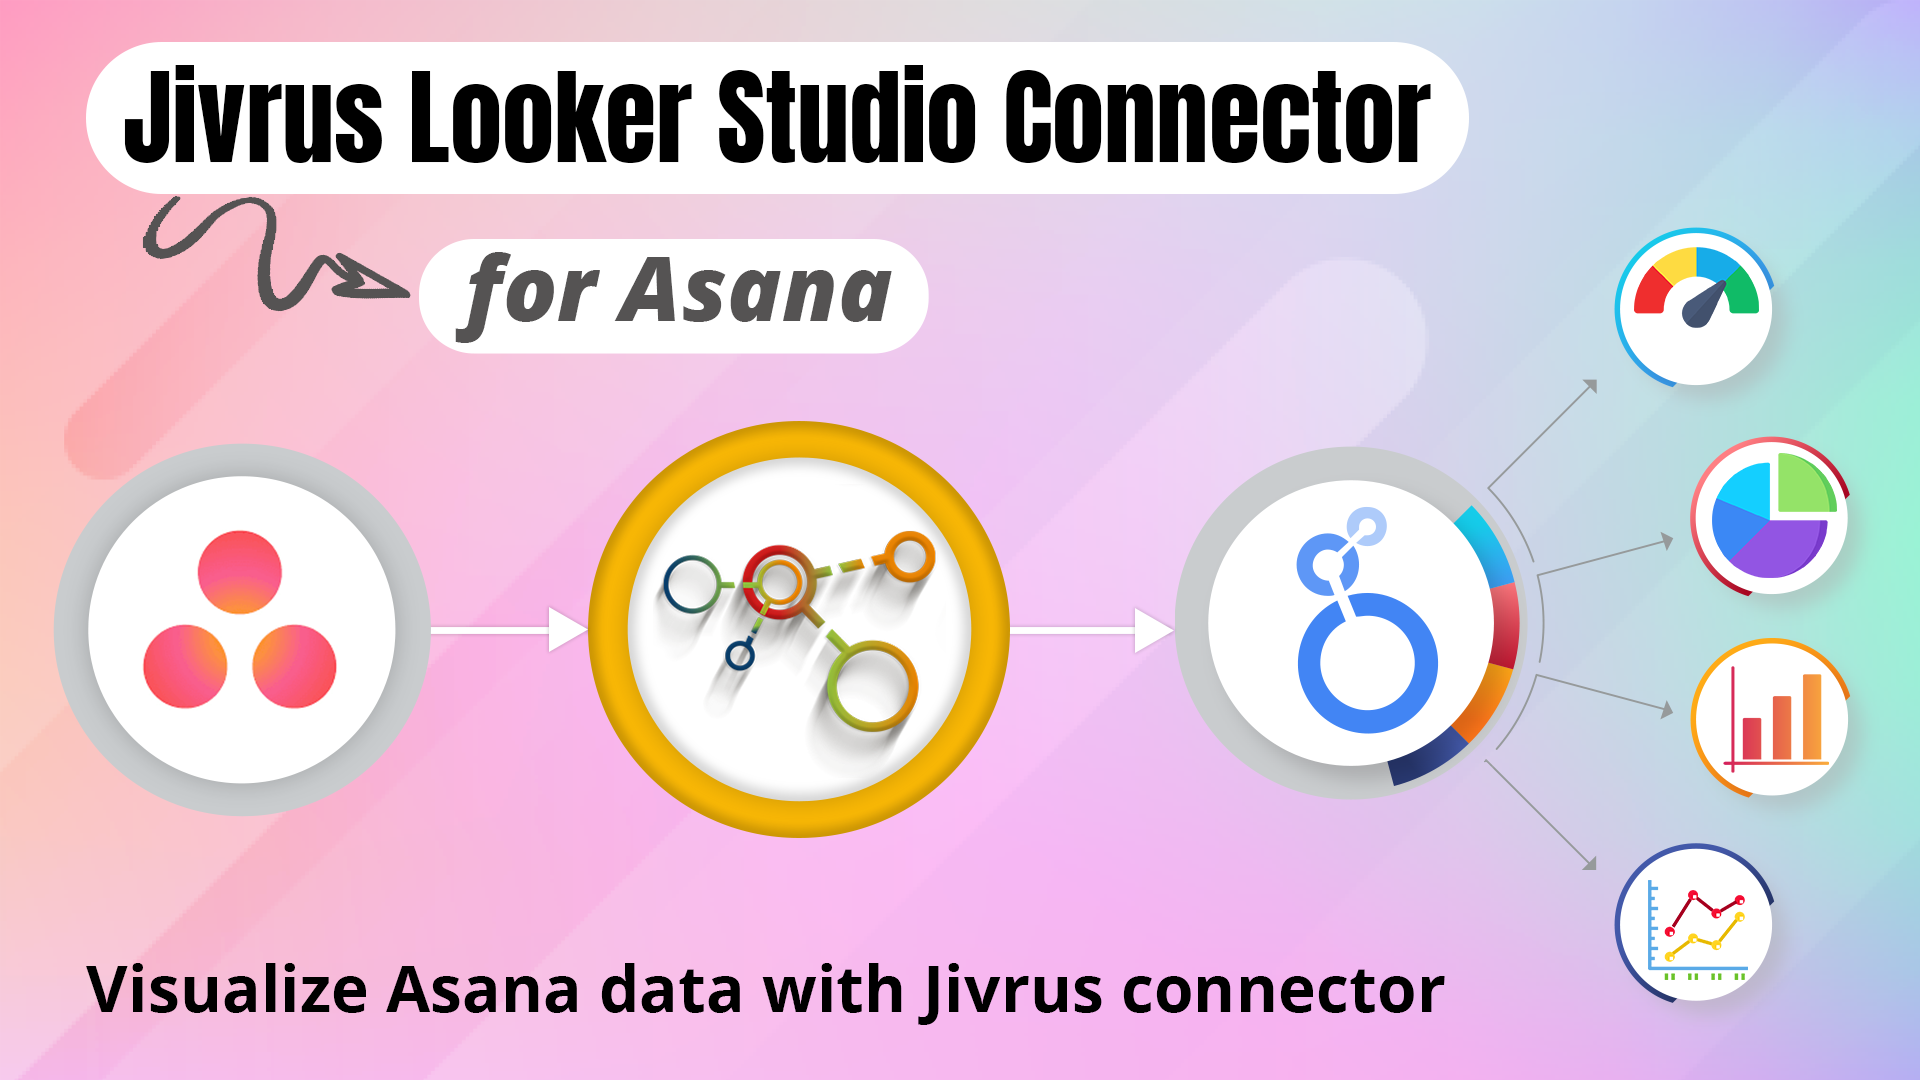 Jivrus Looker Studio Connector for Asana